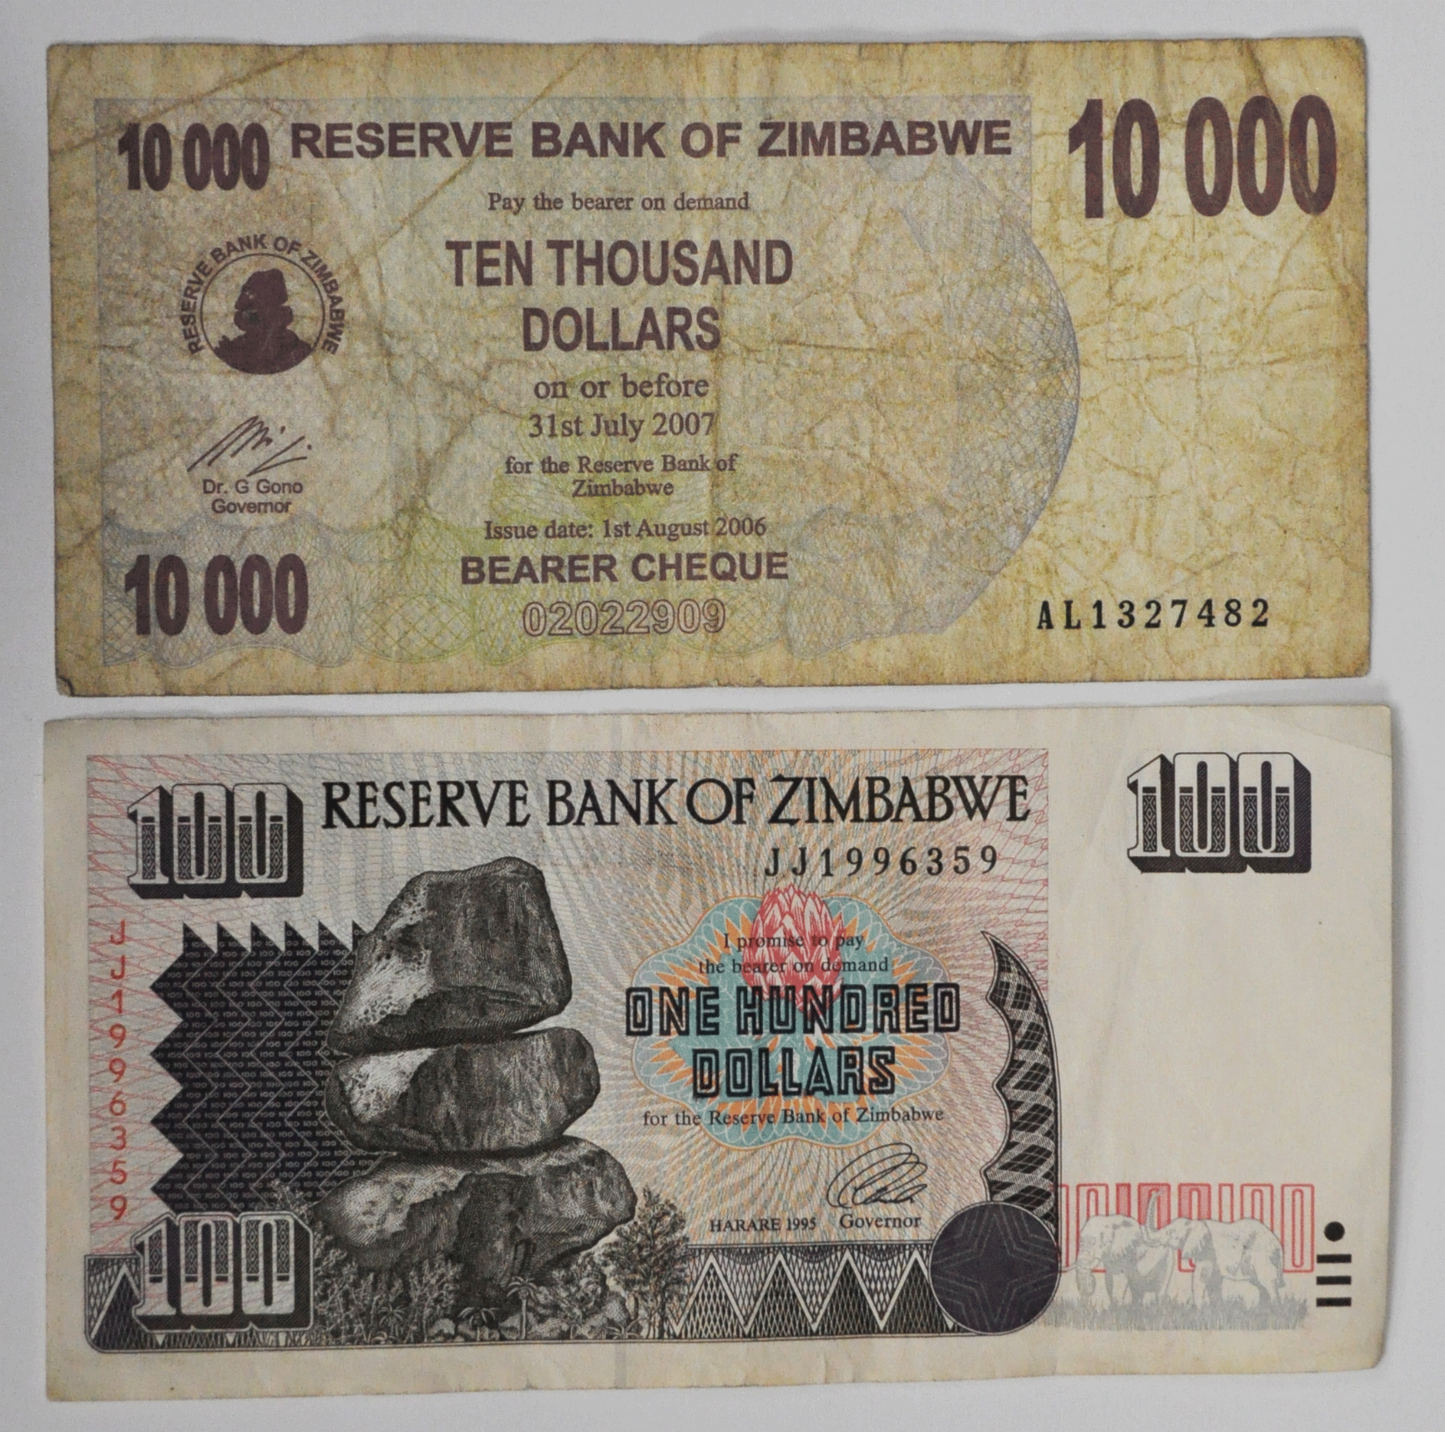 1995 Zimbabwe $100 JJ1996359 & 2006 $10,000 Bearer Cheque 02022909 Al1327482